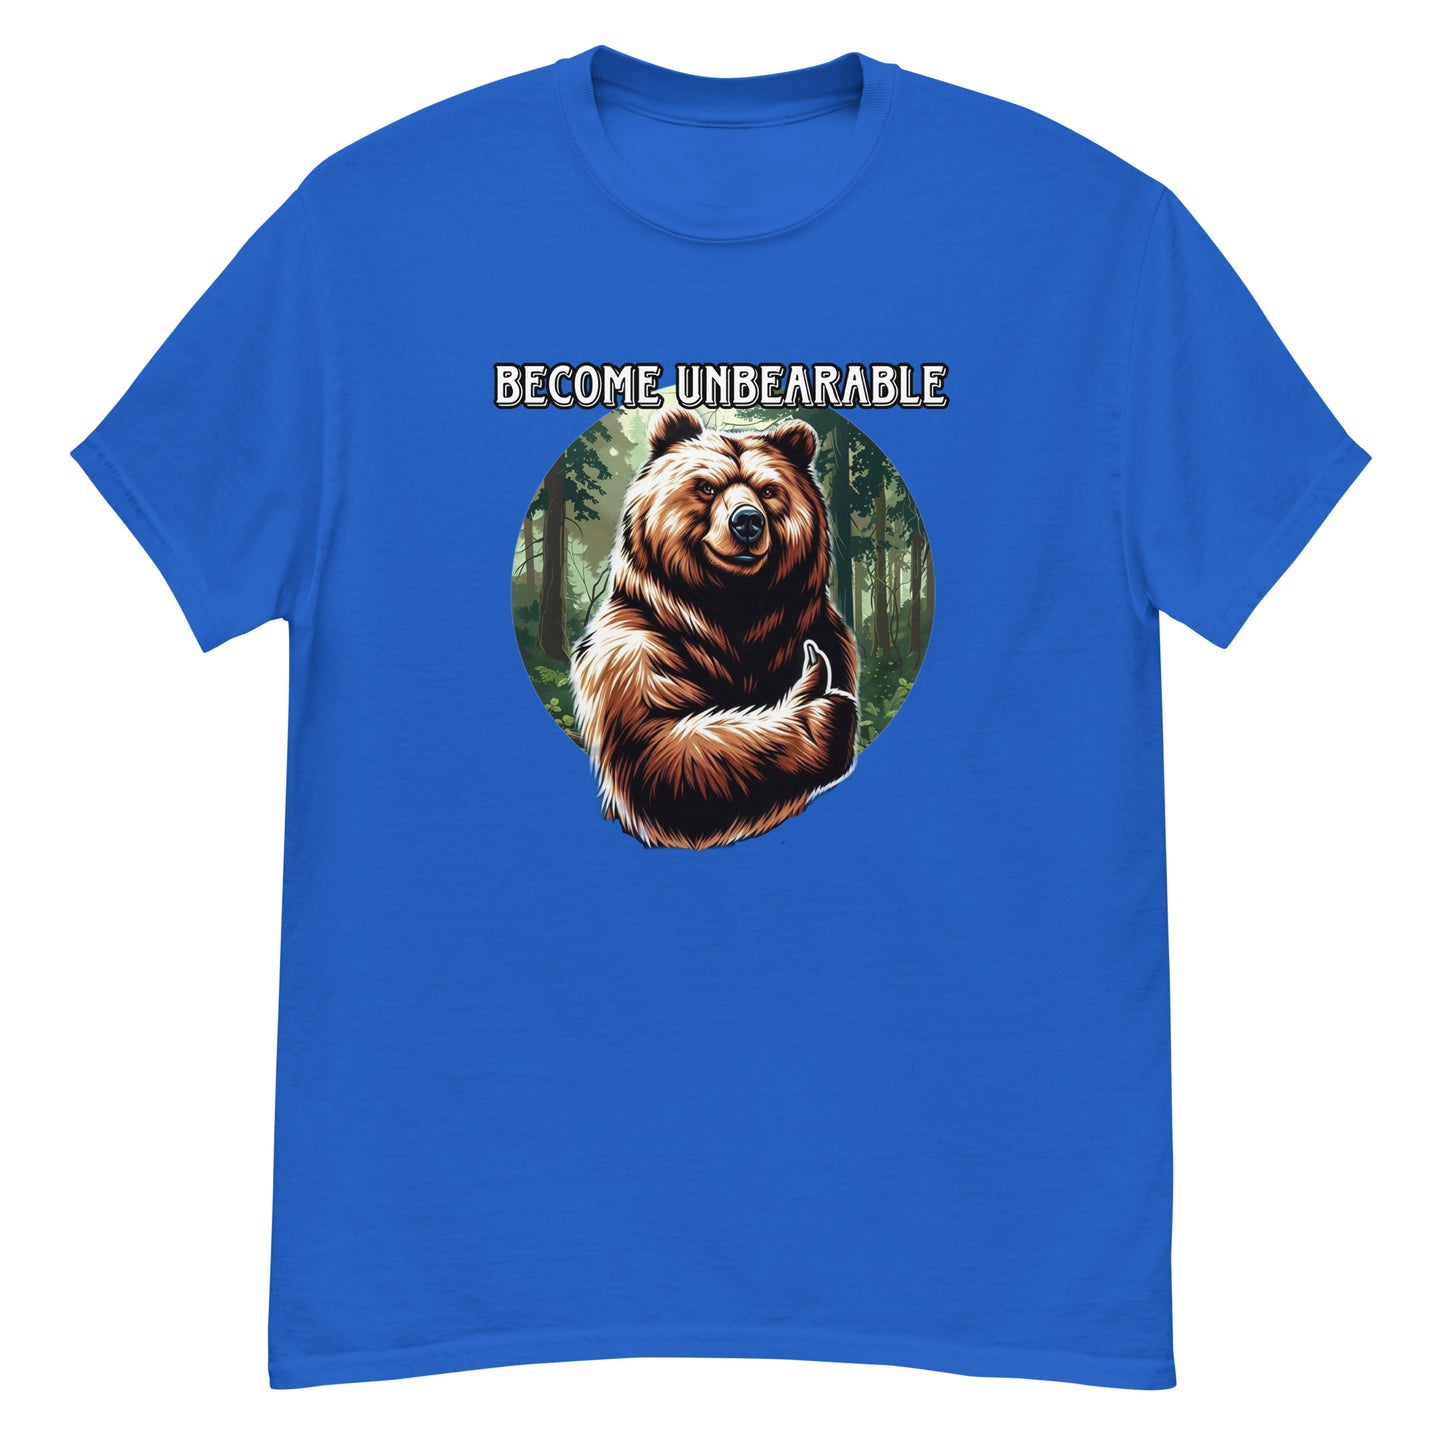 Become unbearable